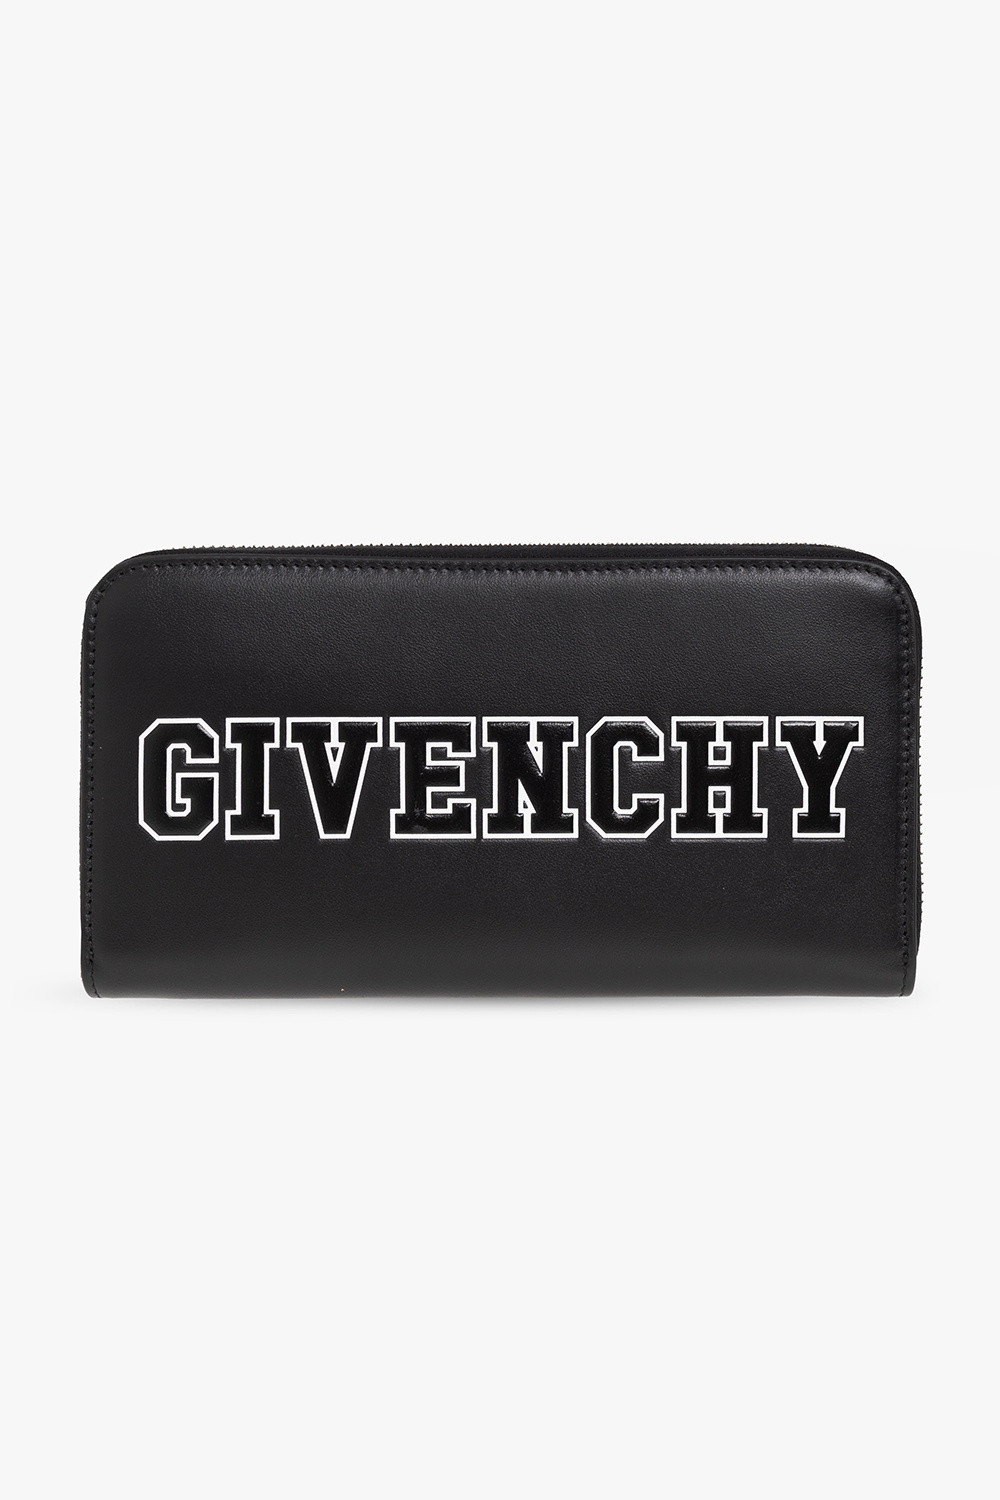 Givenchy Givenchy mini Cut Out shoulder bag